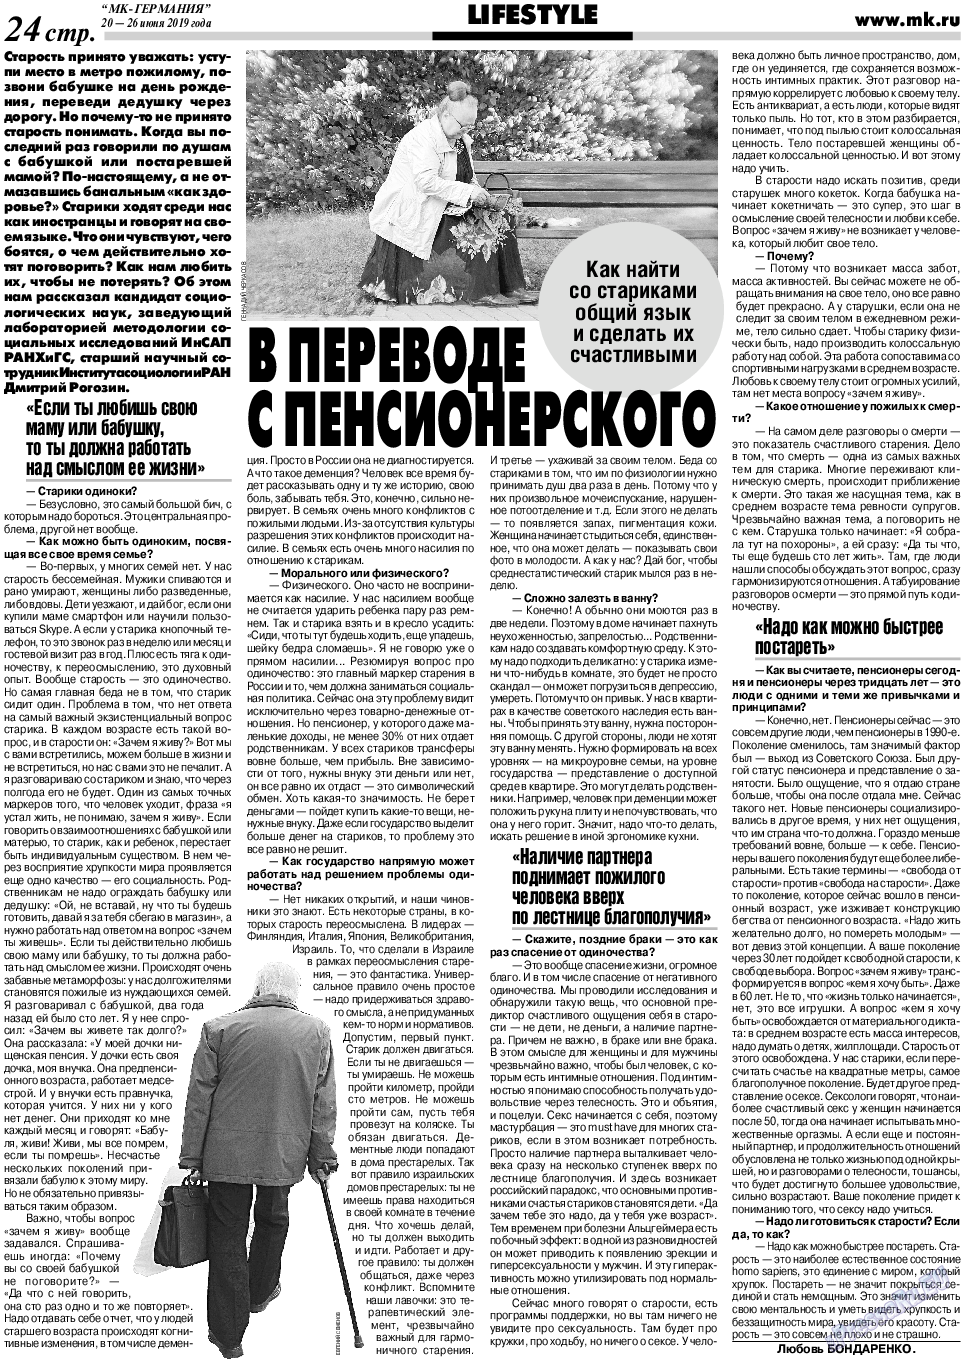 МК-Германия, газета. 2019 №26 стр.24